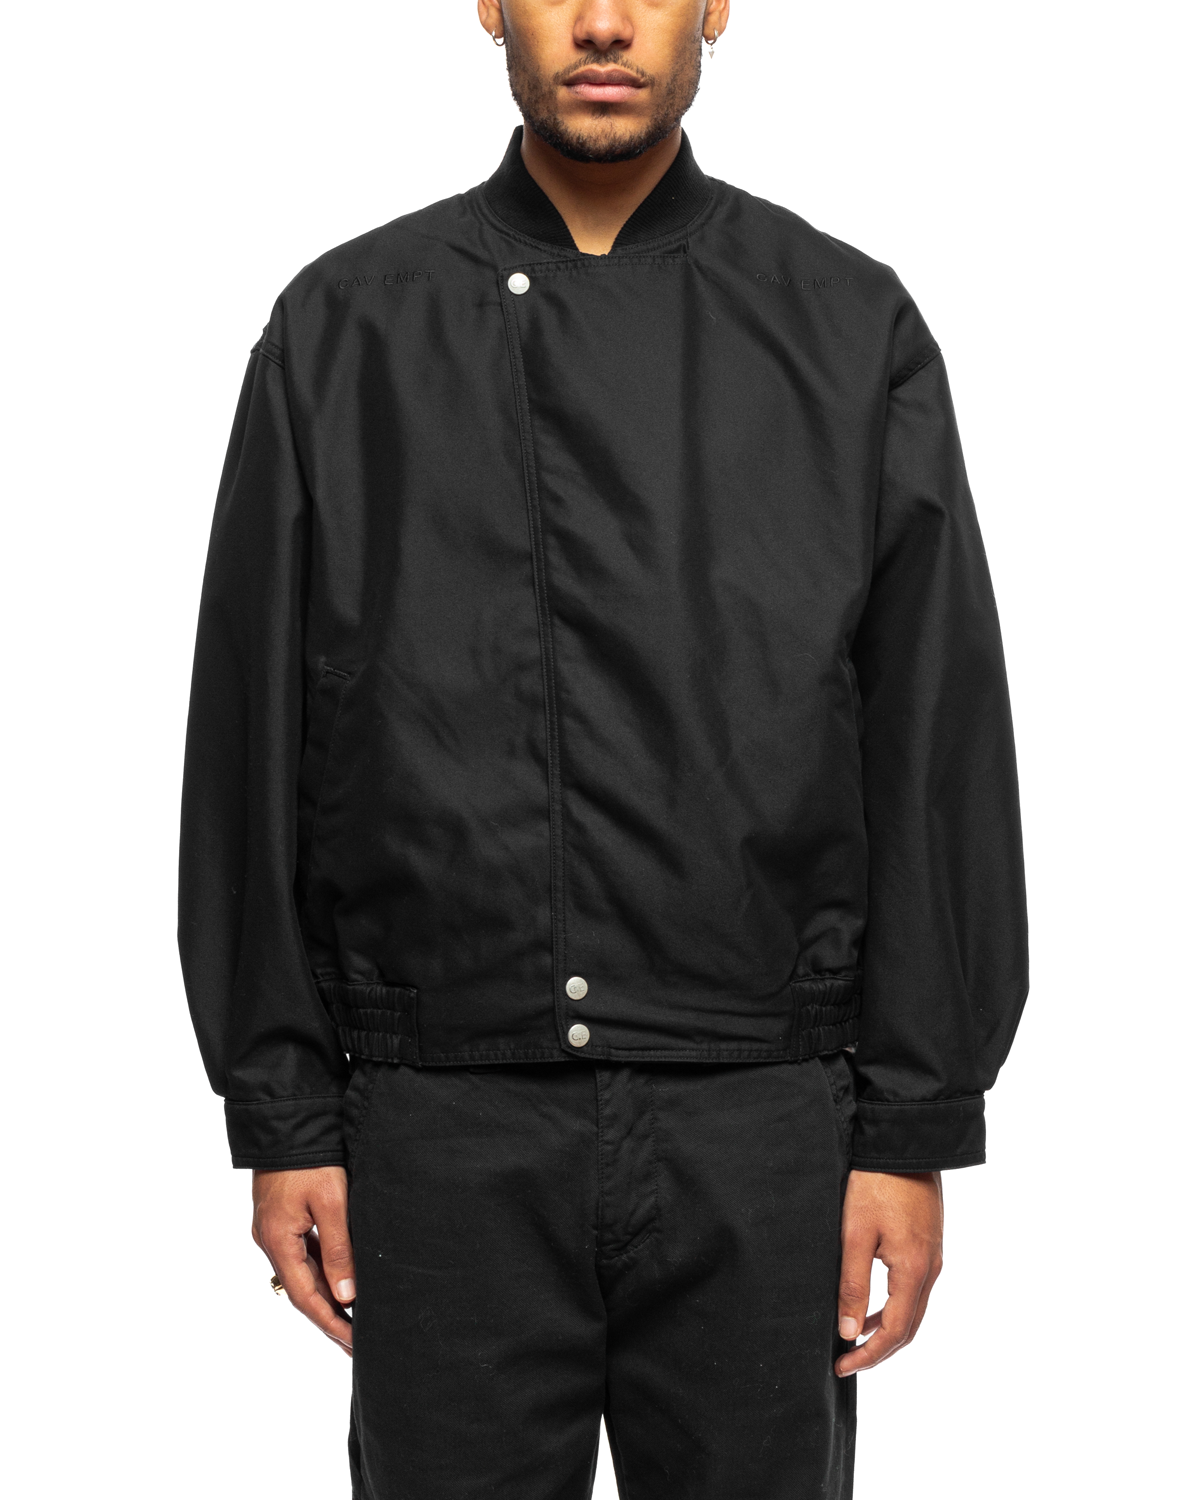 CDG Tailored Patchwork Jacket Black